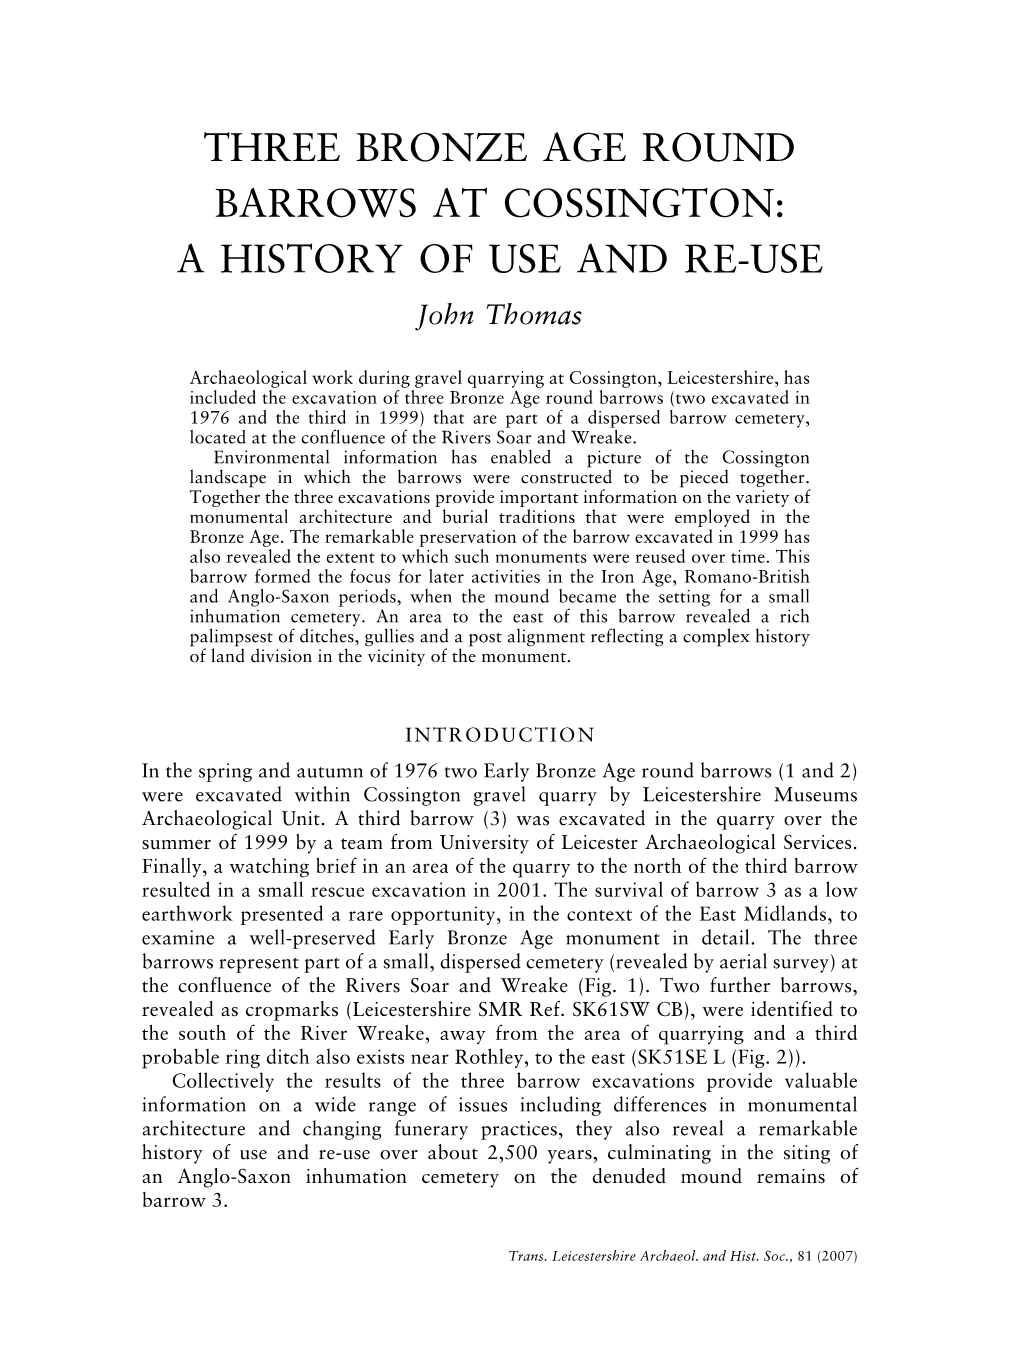 THREE BRONZE AGE ROUND BARROWS at COSSINGTON: a HISTORY of USE and RE-USE John Thomas